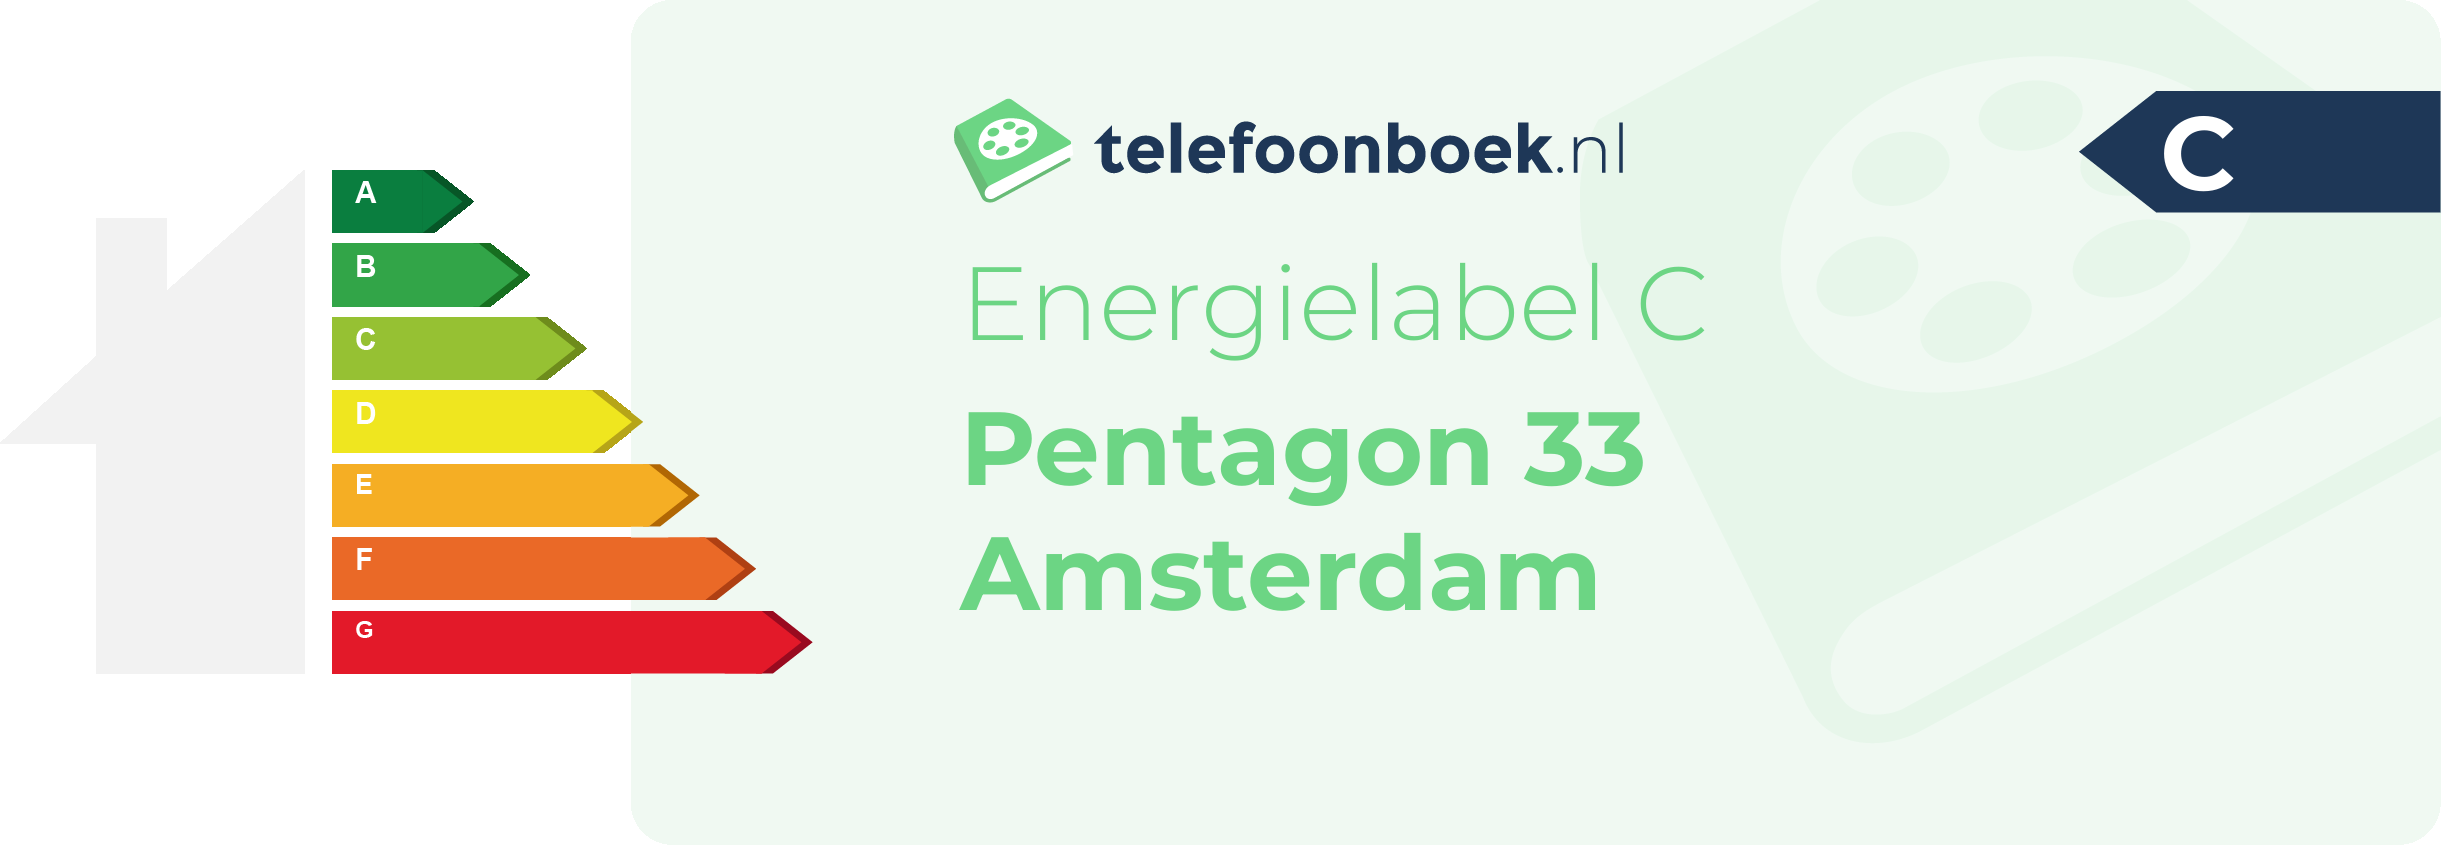 Energielabel Pentagon 33 Amsterdam